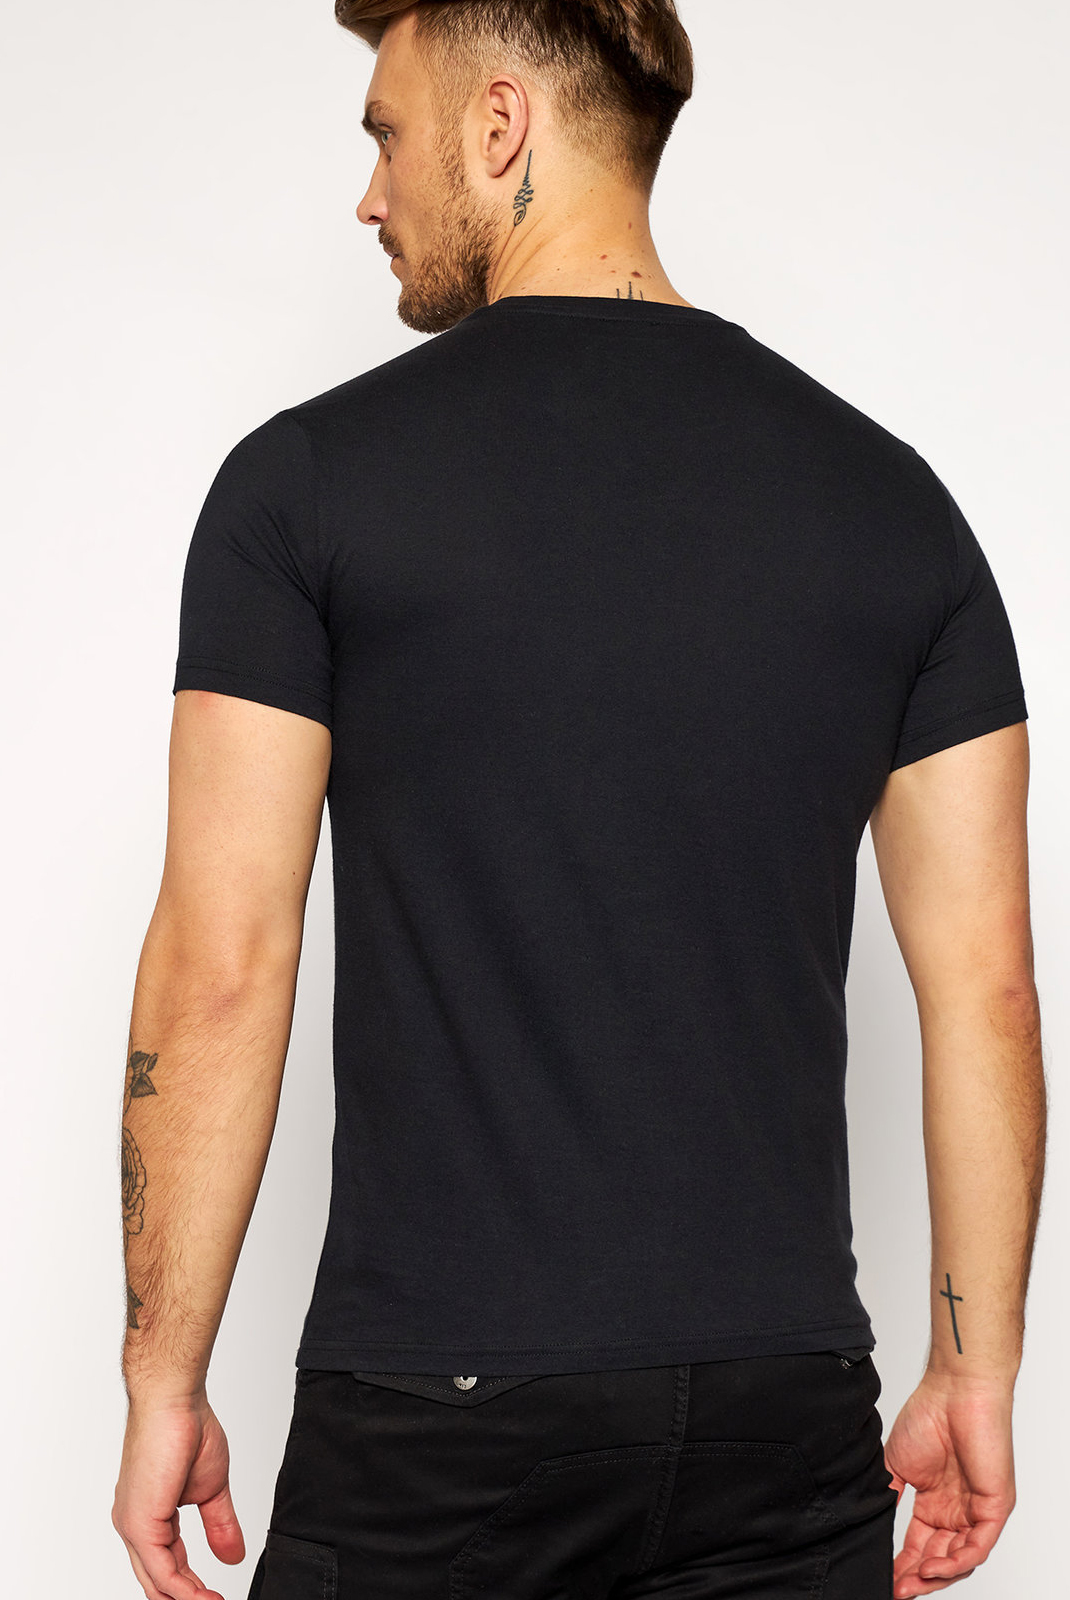  Tee-shirt Noir Regular Fit 211831 1p469 Emporio Armani